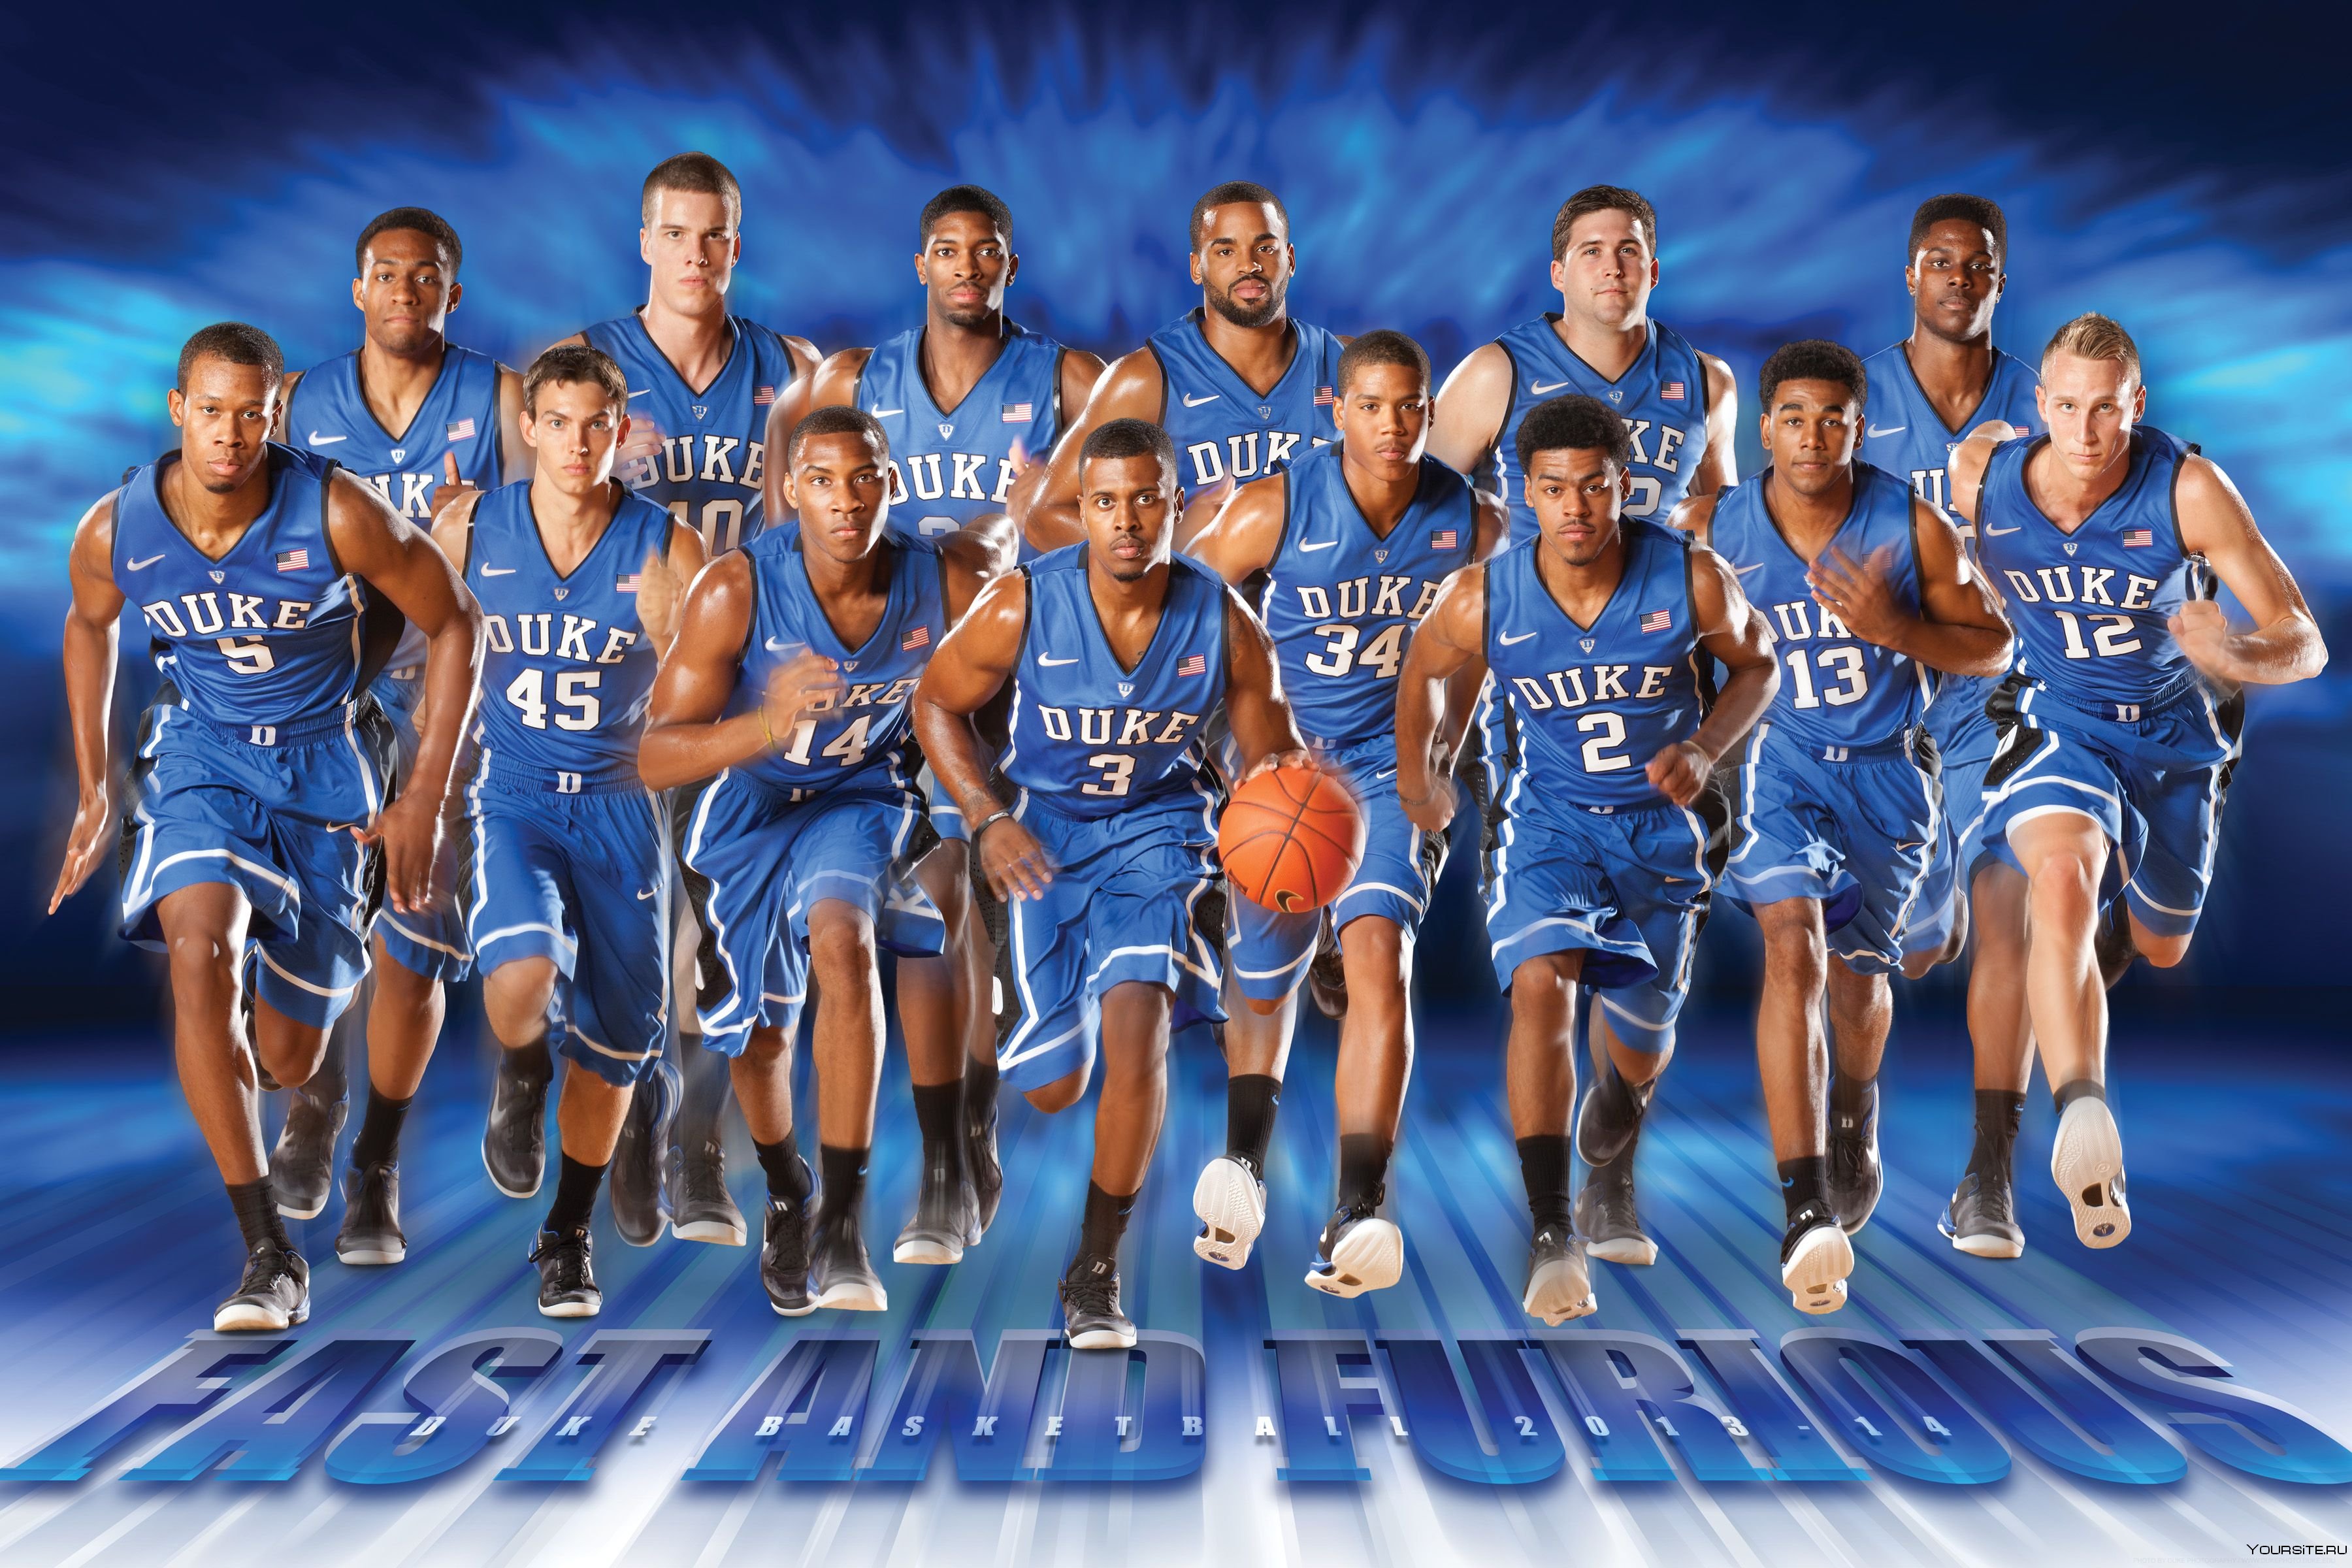 Team sport 5. Баскетбольная команда Дьюк. Американские баскетбольные команды. Игрок баскетбольной команды. Фотосессия баскетбольной команды.